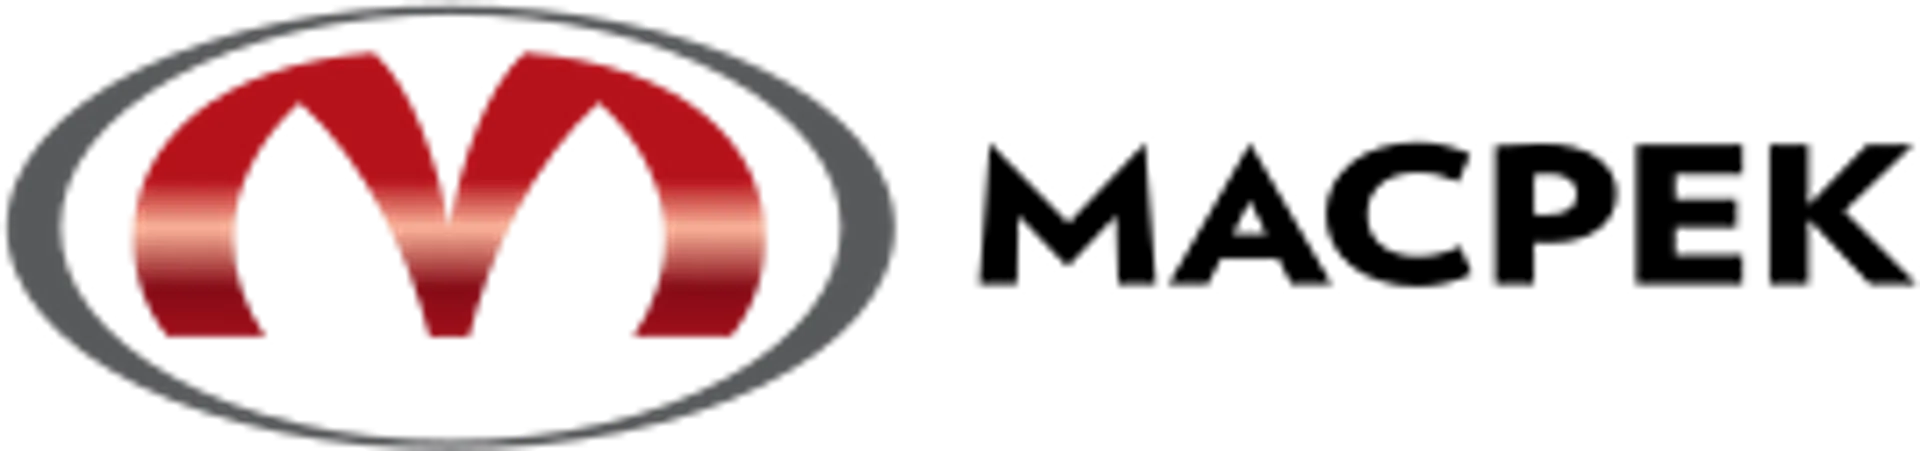 MACPEK logo de circulaire